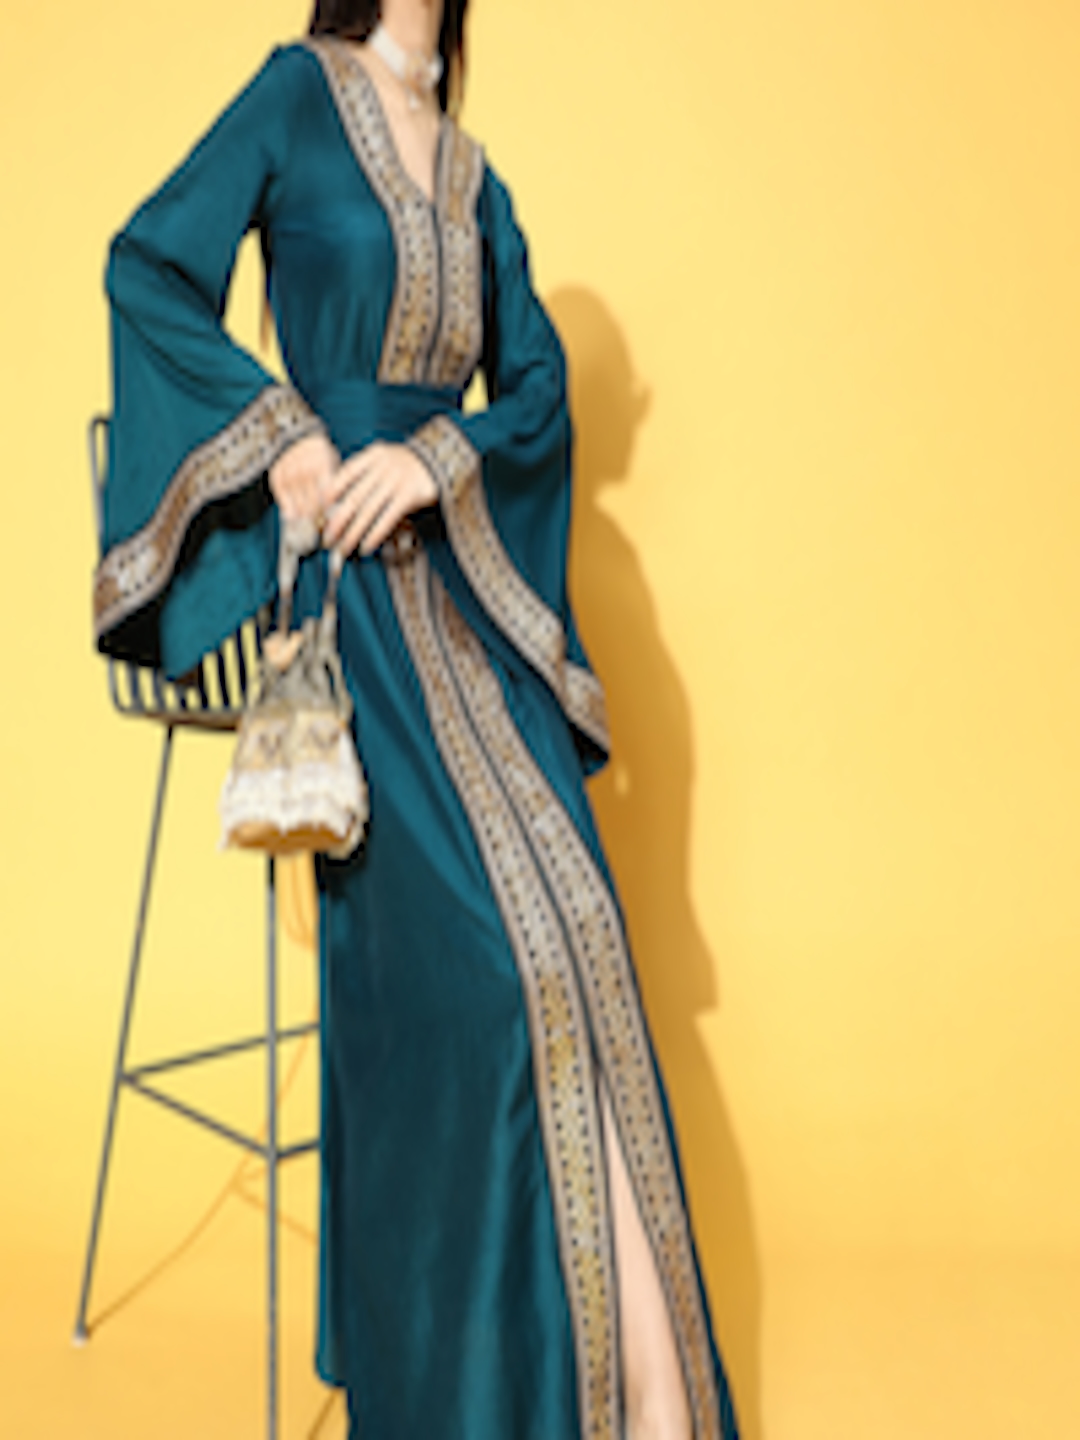 Buy Inddus Women Teal & Golden Ethnic Motifs Ethnic A Line Maxi Dress ...